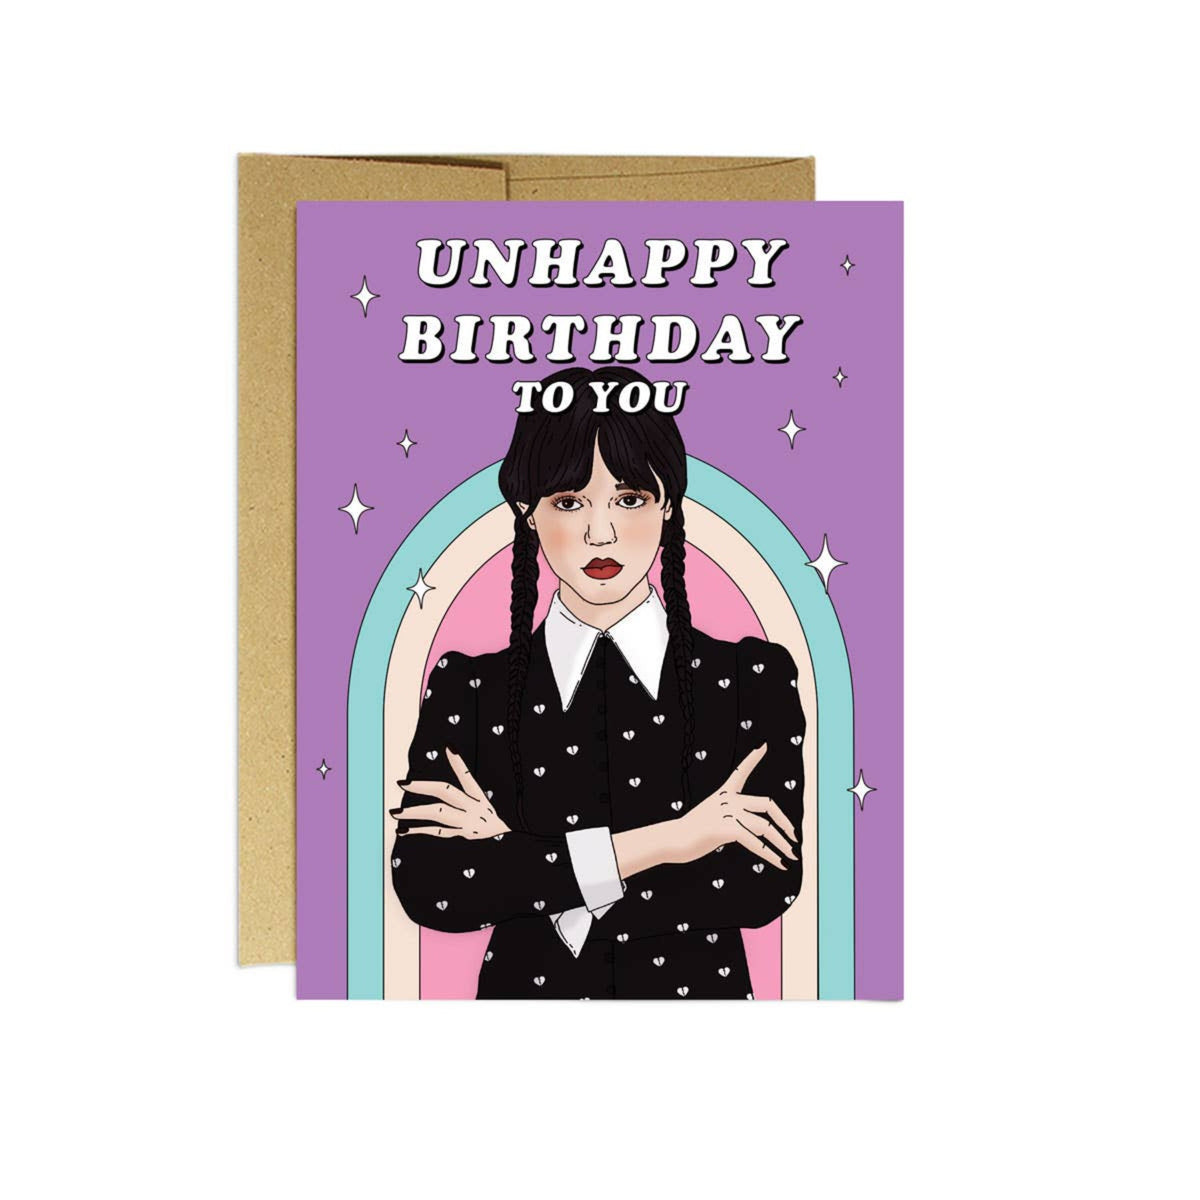 Party Mountain Paper co. - Unhappy Birthday | Birthday Card